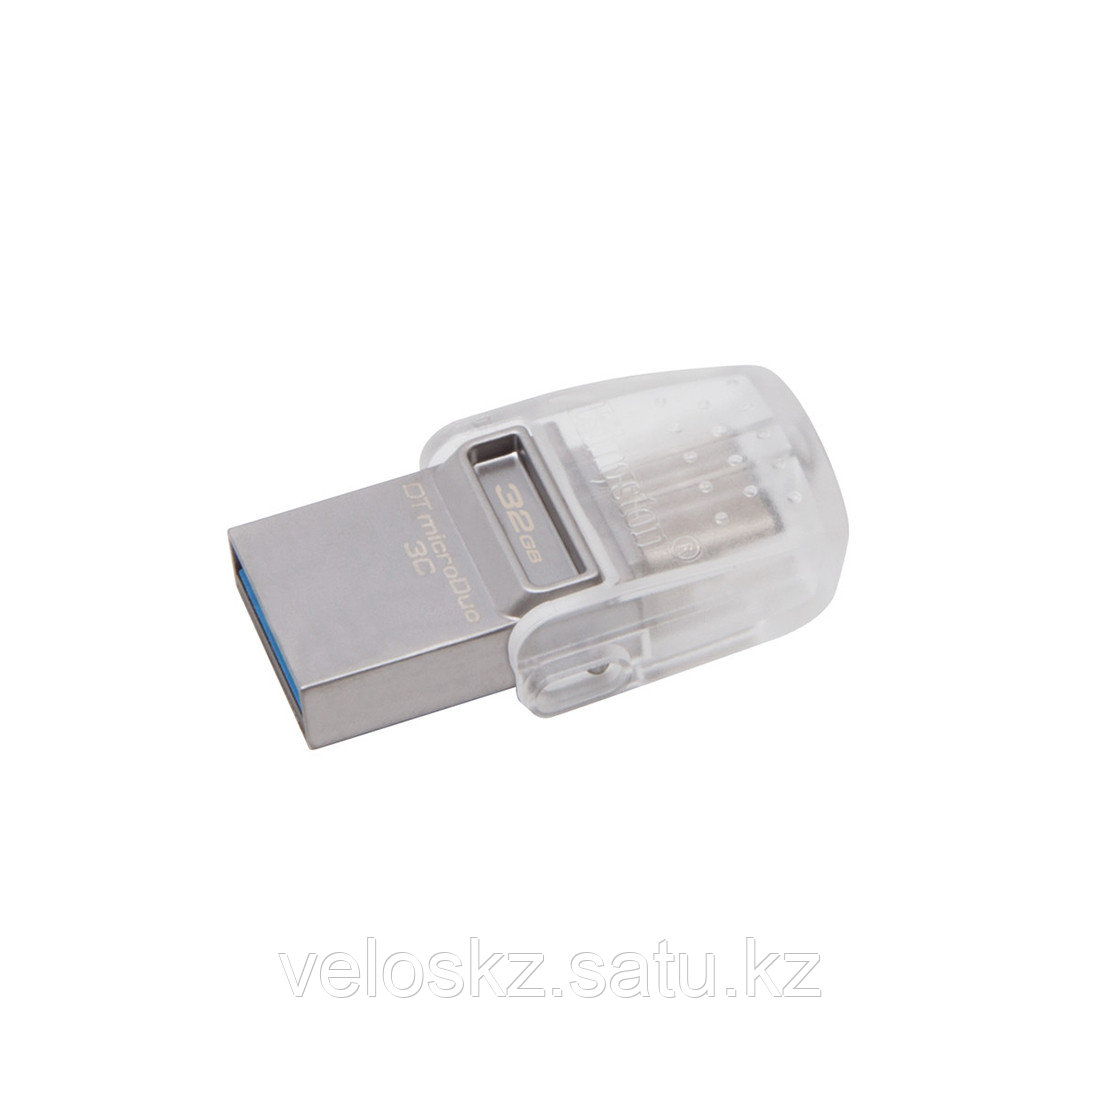 USB-накопитель Kingston DTDUO3C/32GB 32GB Серебристый